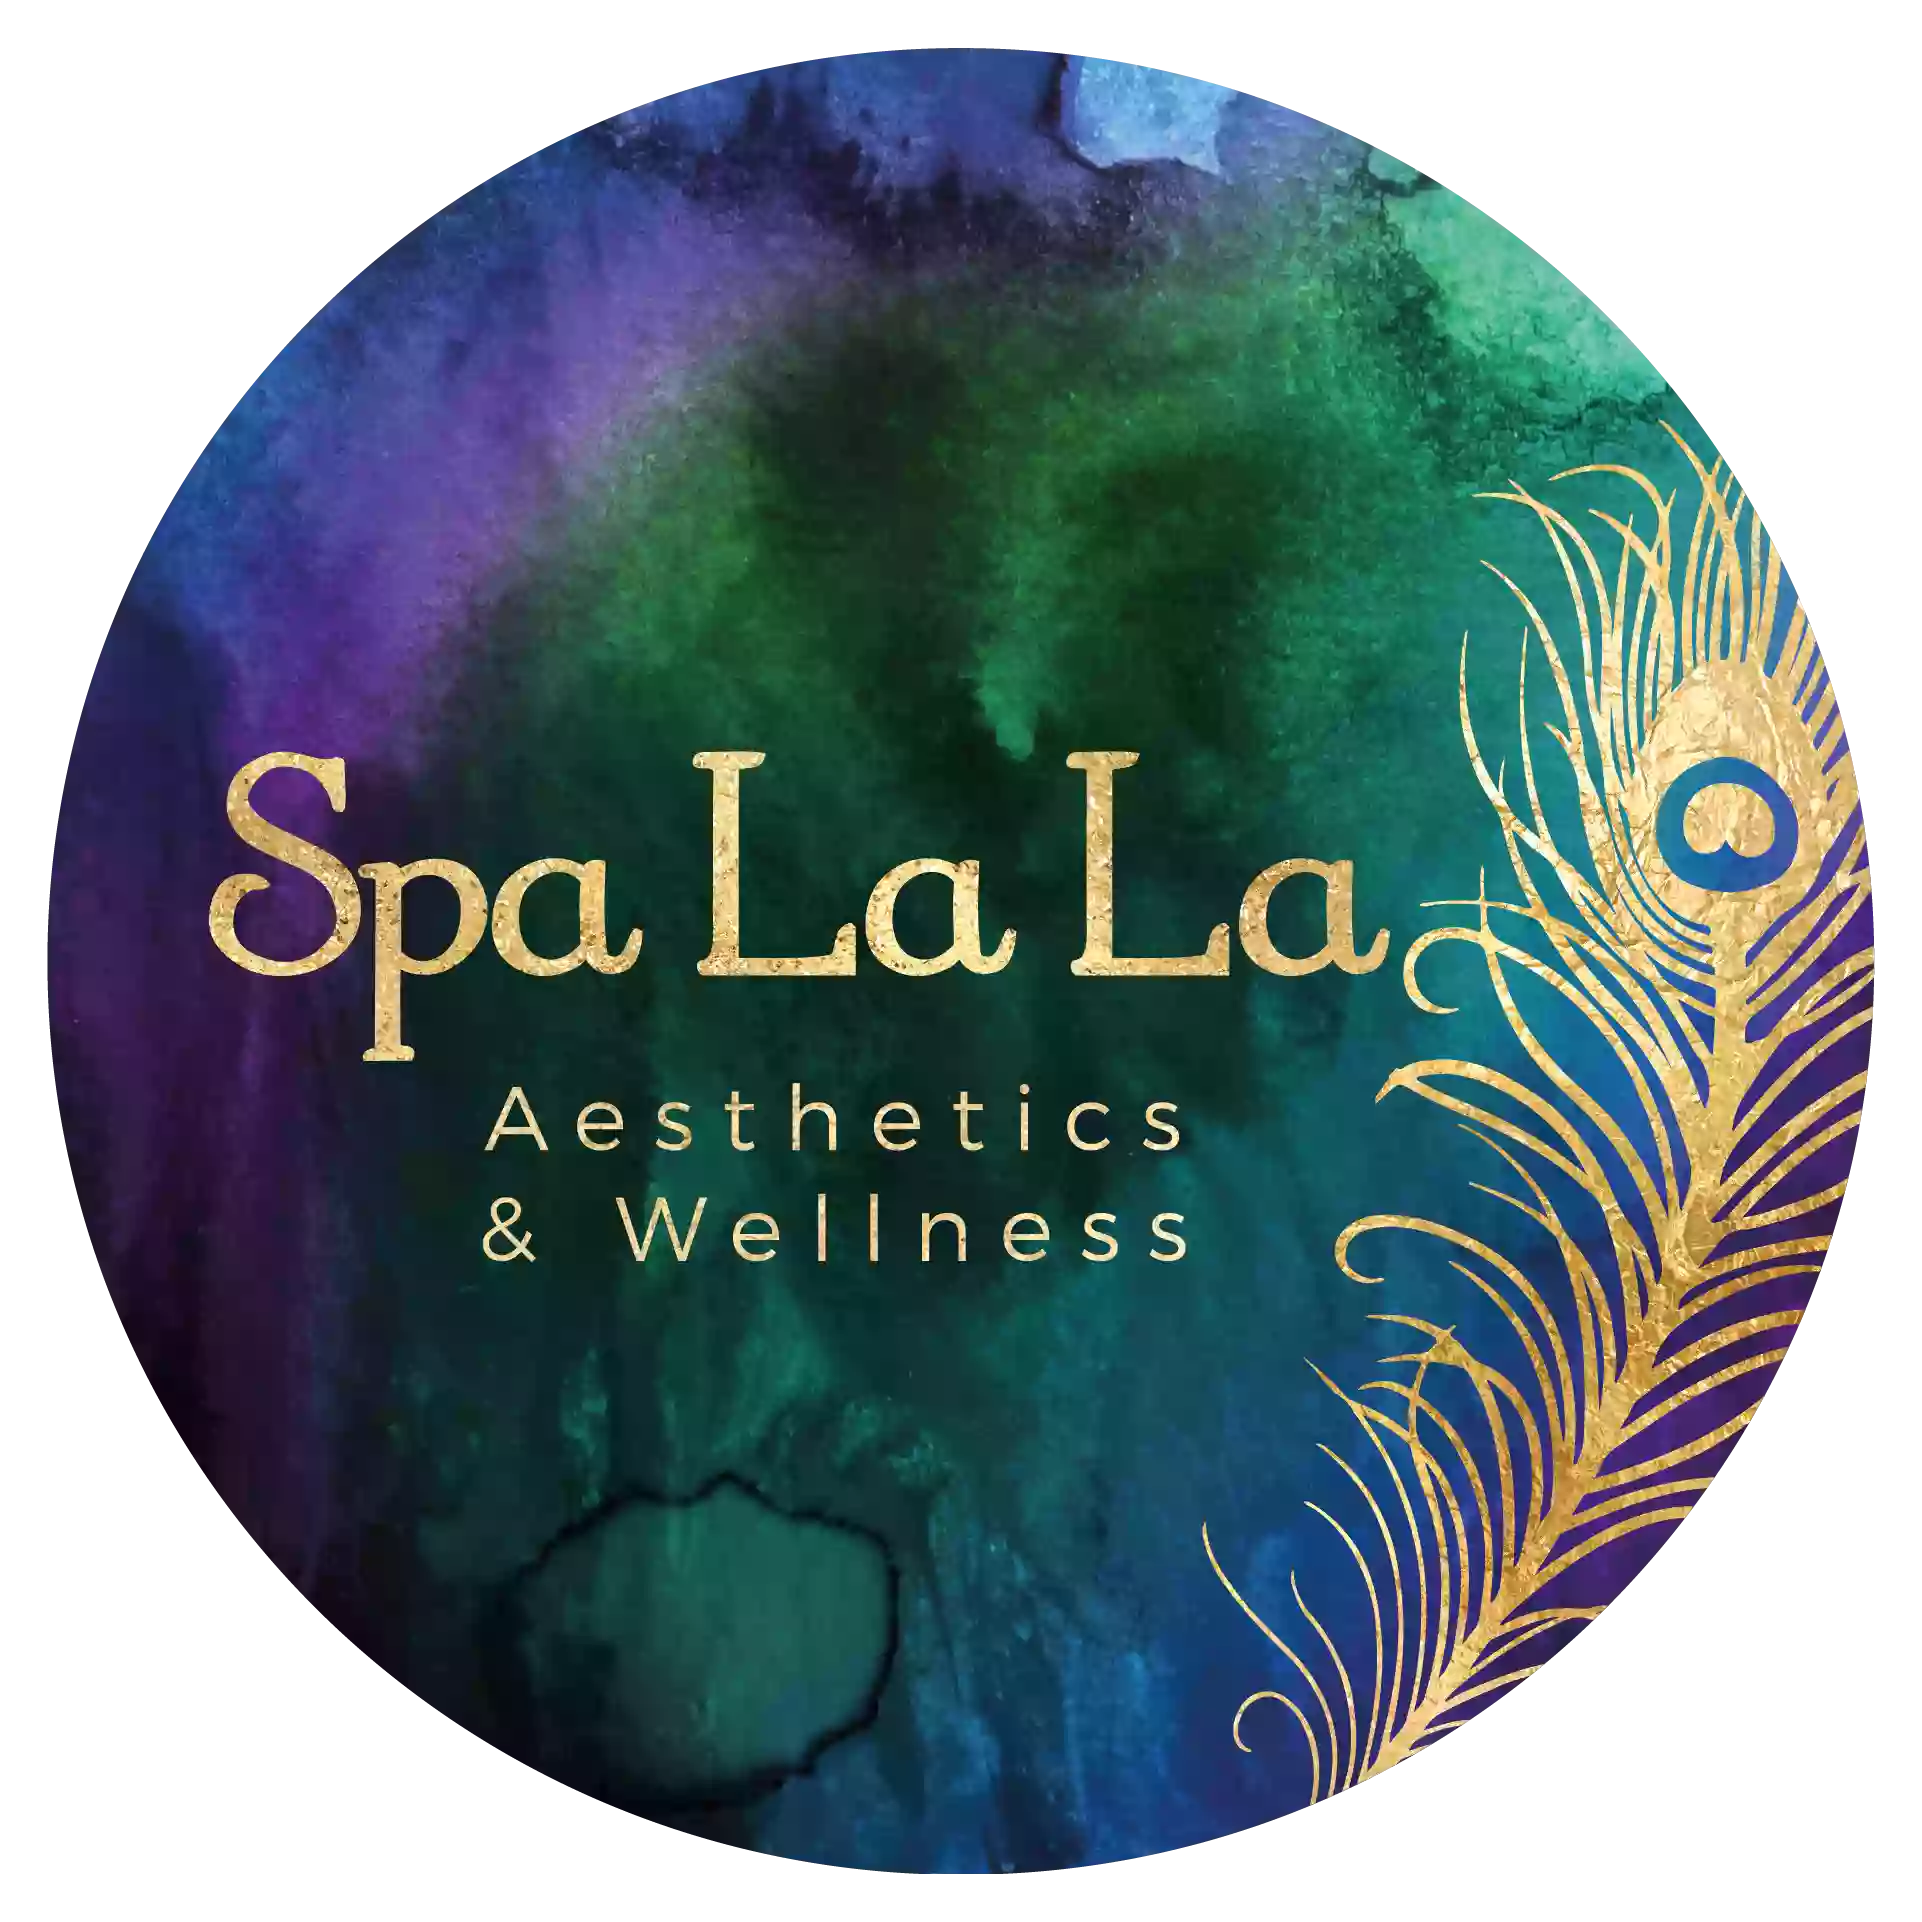 Spa La La Aesthetics & Wellness